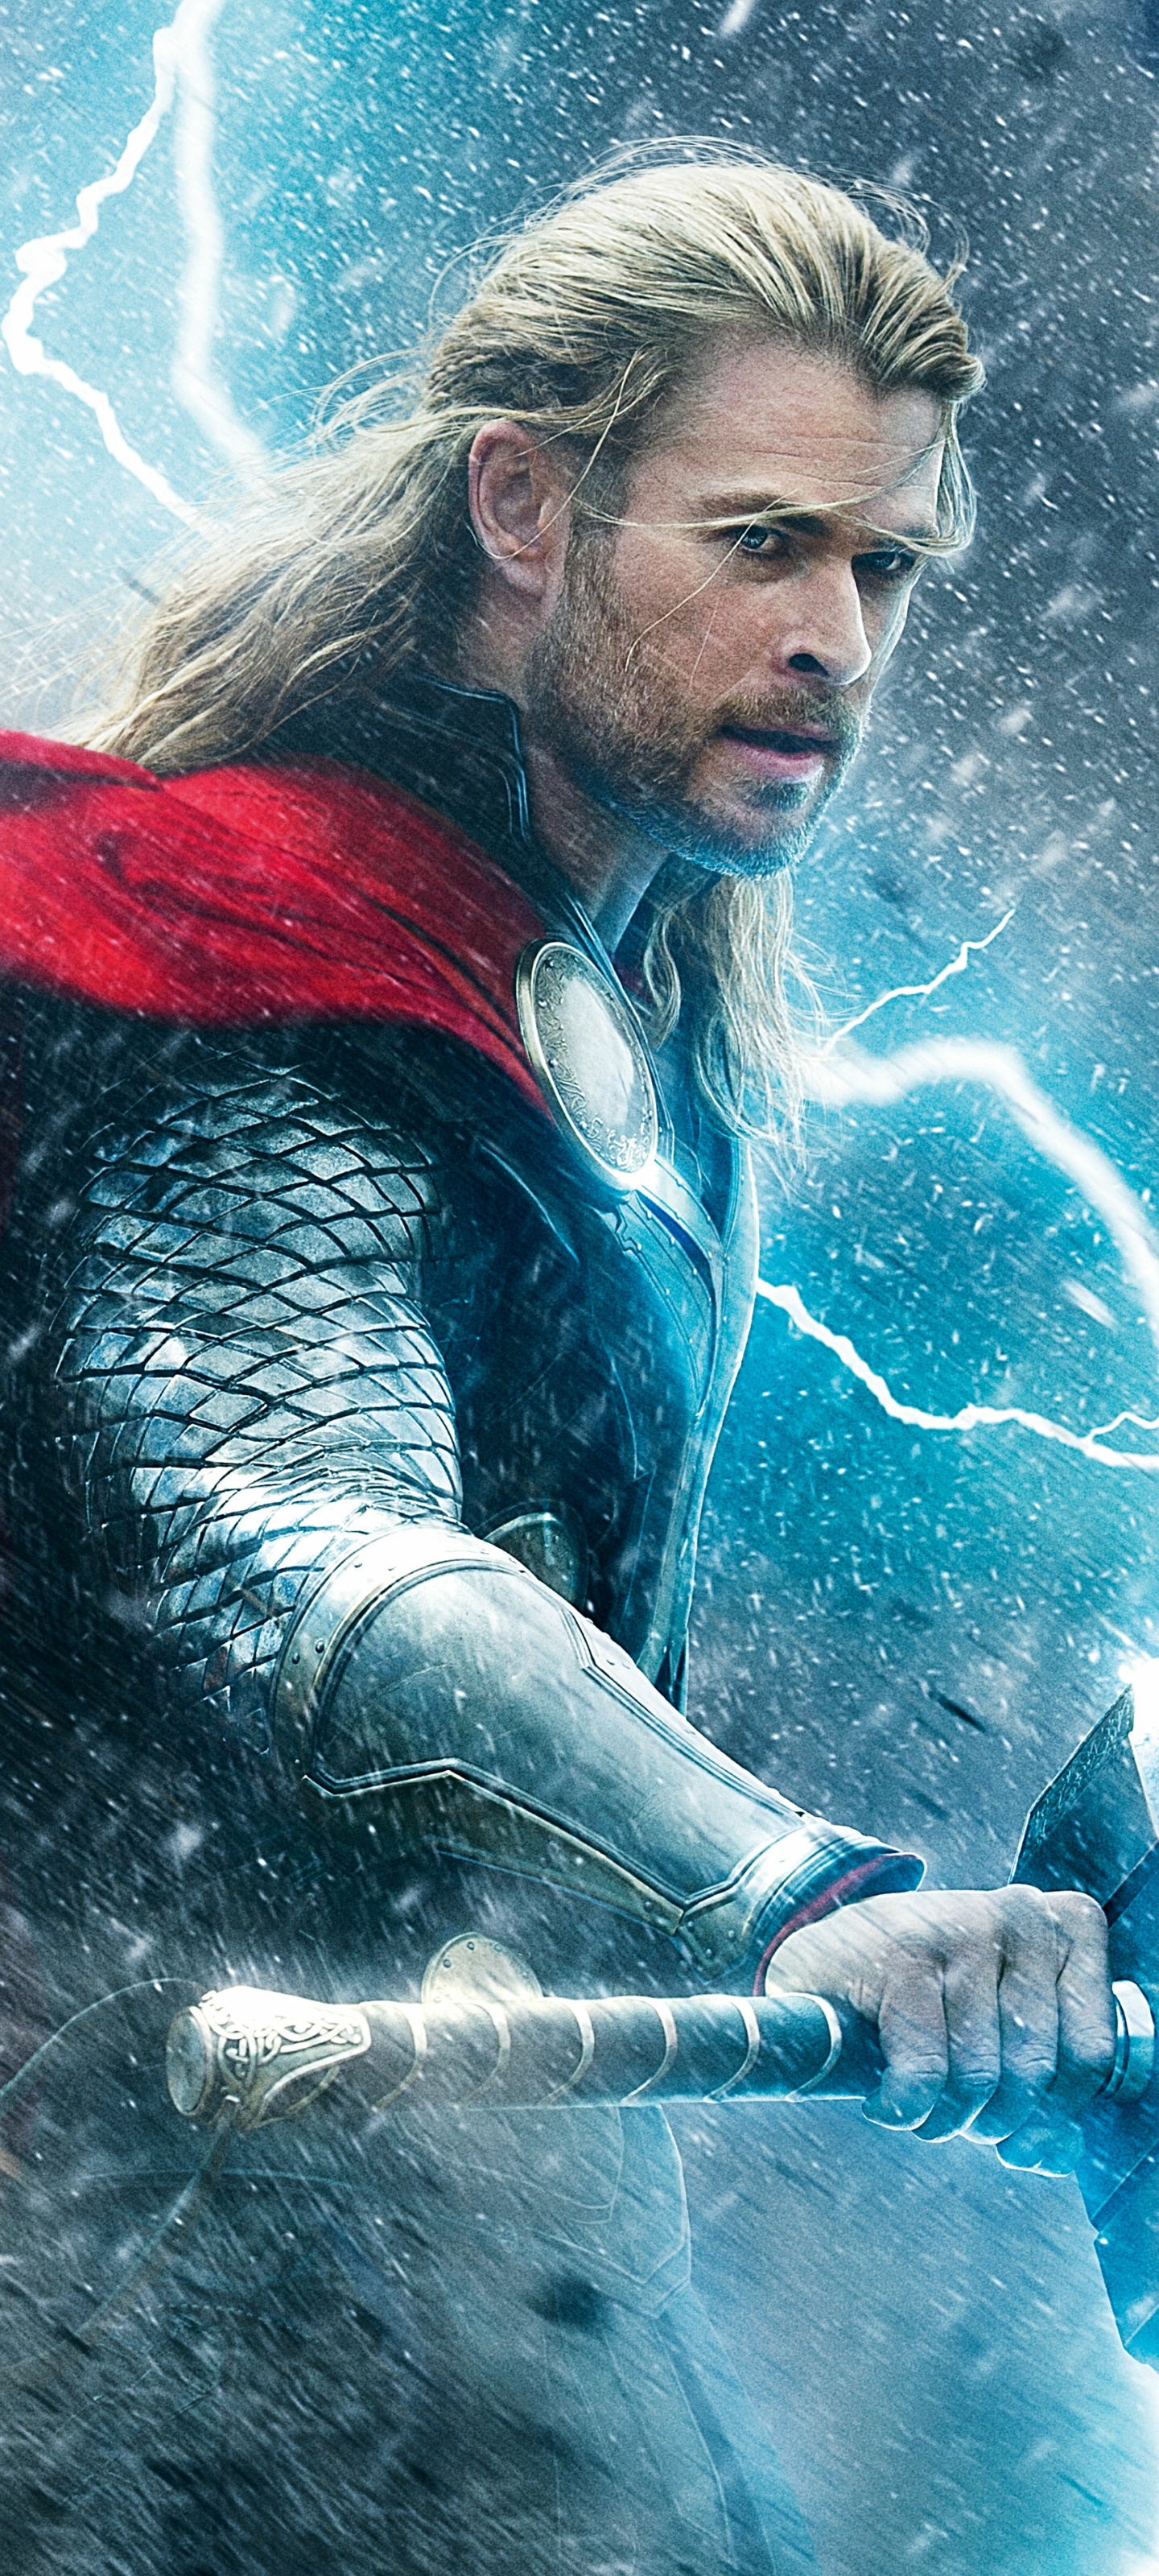 Descarga gratuita de fondo de pantalla para móvil de Películas, Superhéroe, Mjolnir, Thor, Chris Hemsworth, Thor: El Mundo Oscuro.